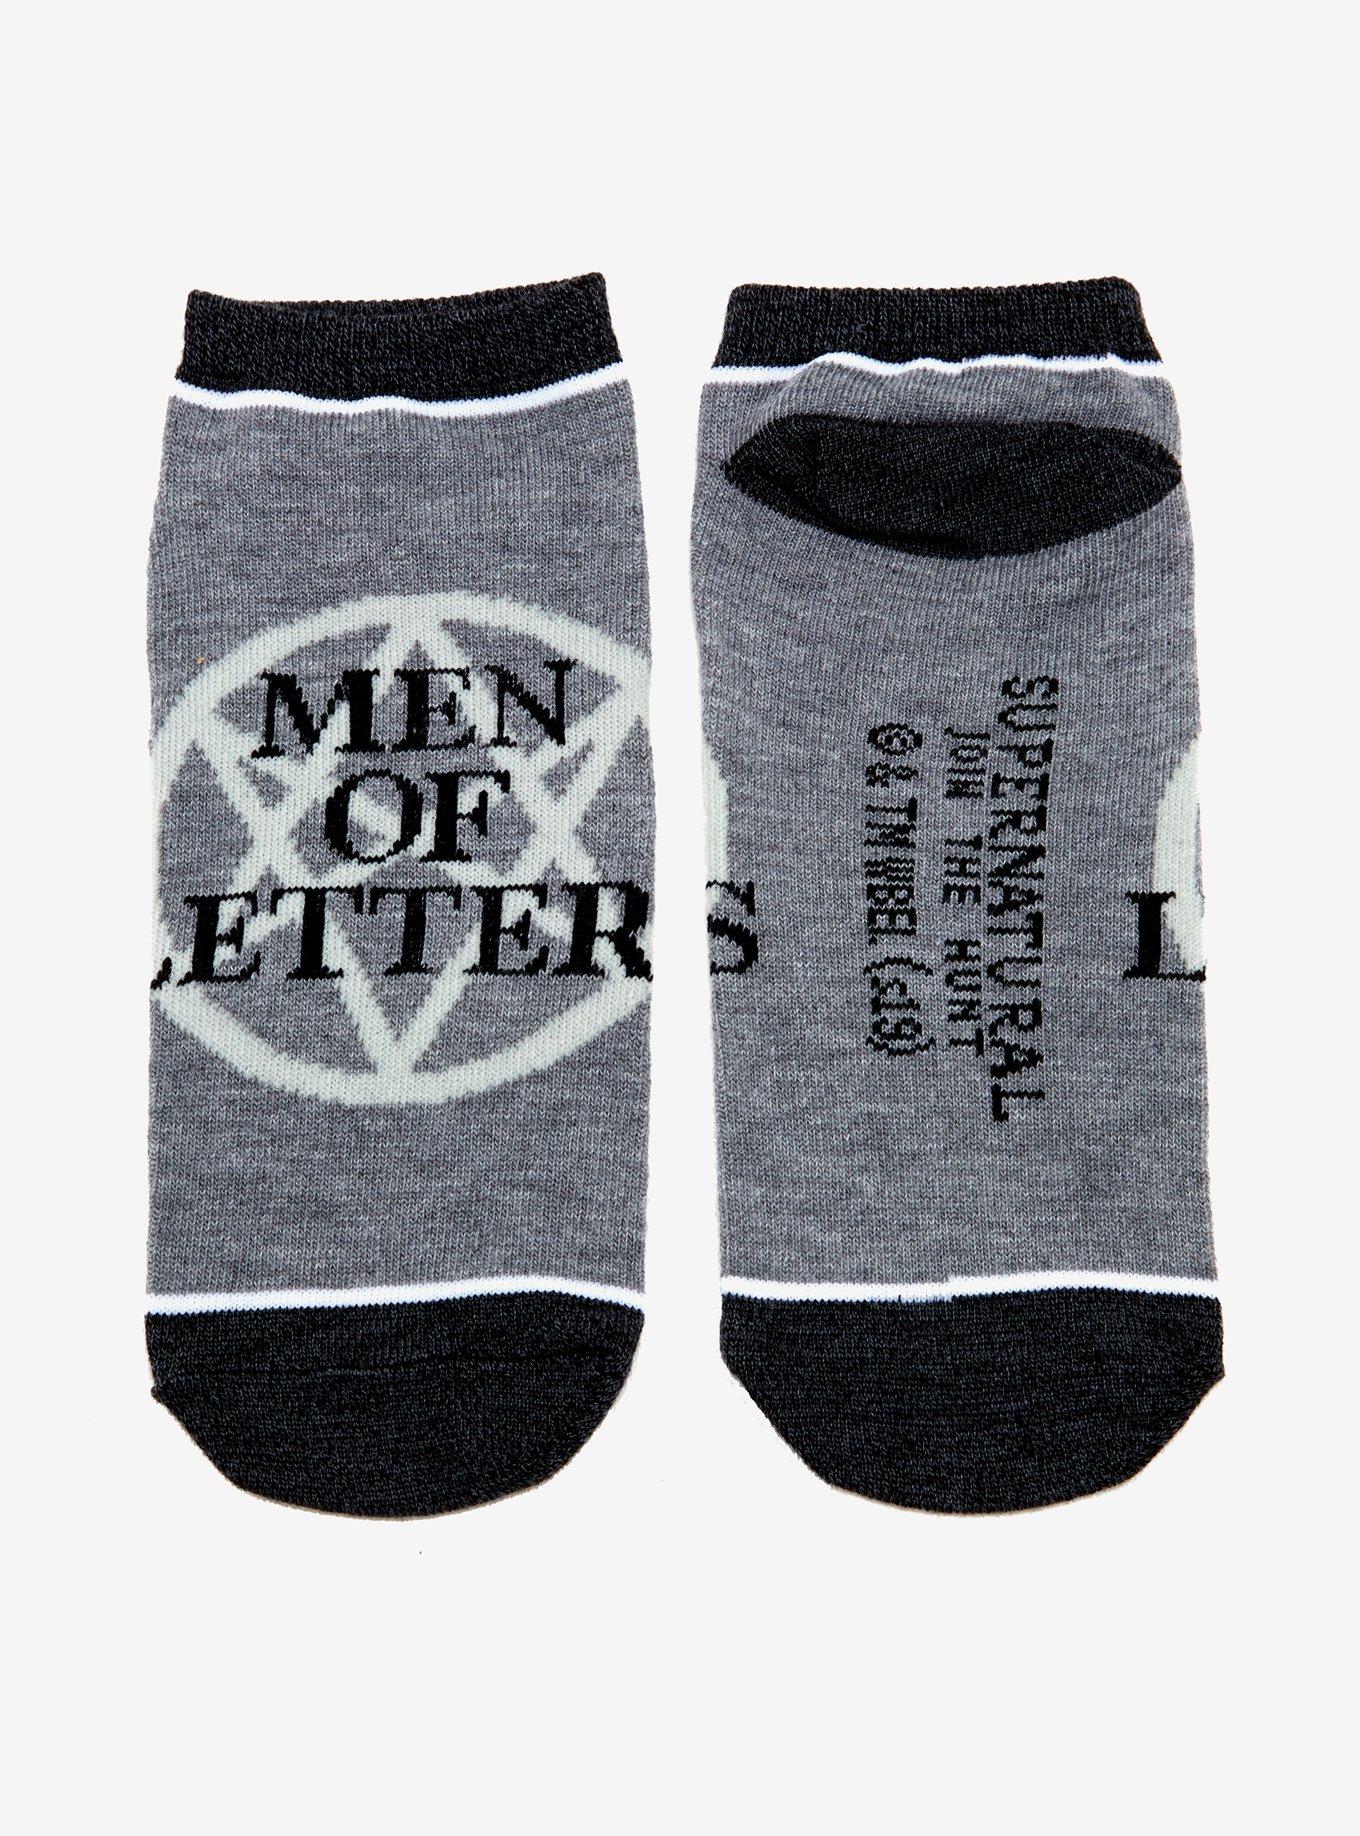 Supernatural Men Of Letters No-Show Socks, , alternate